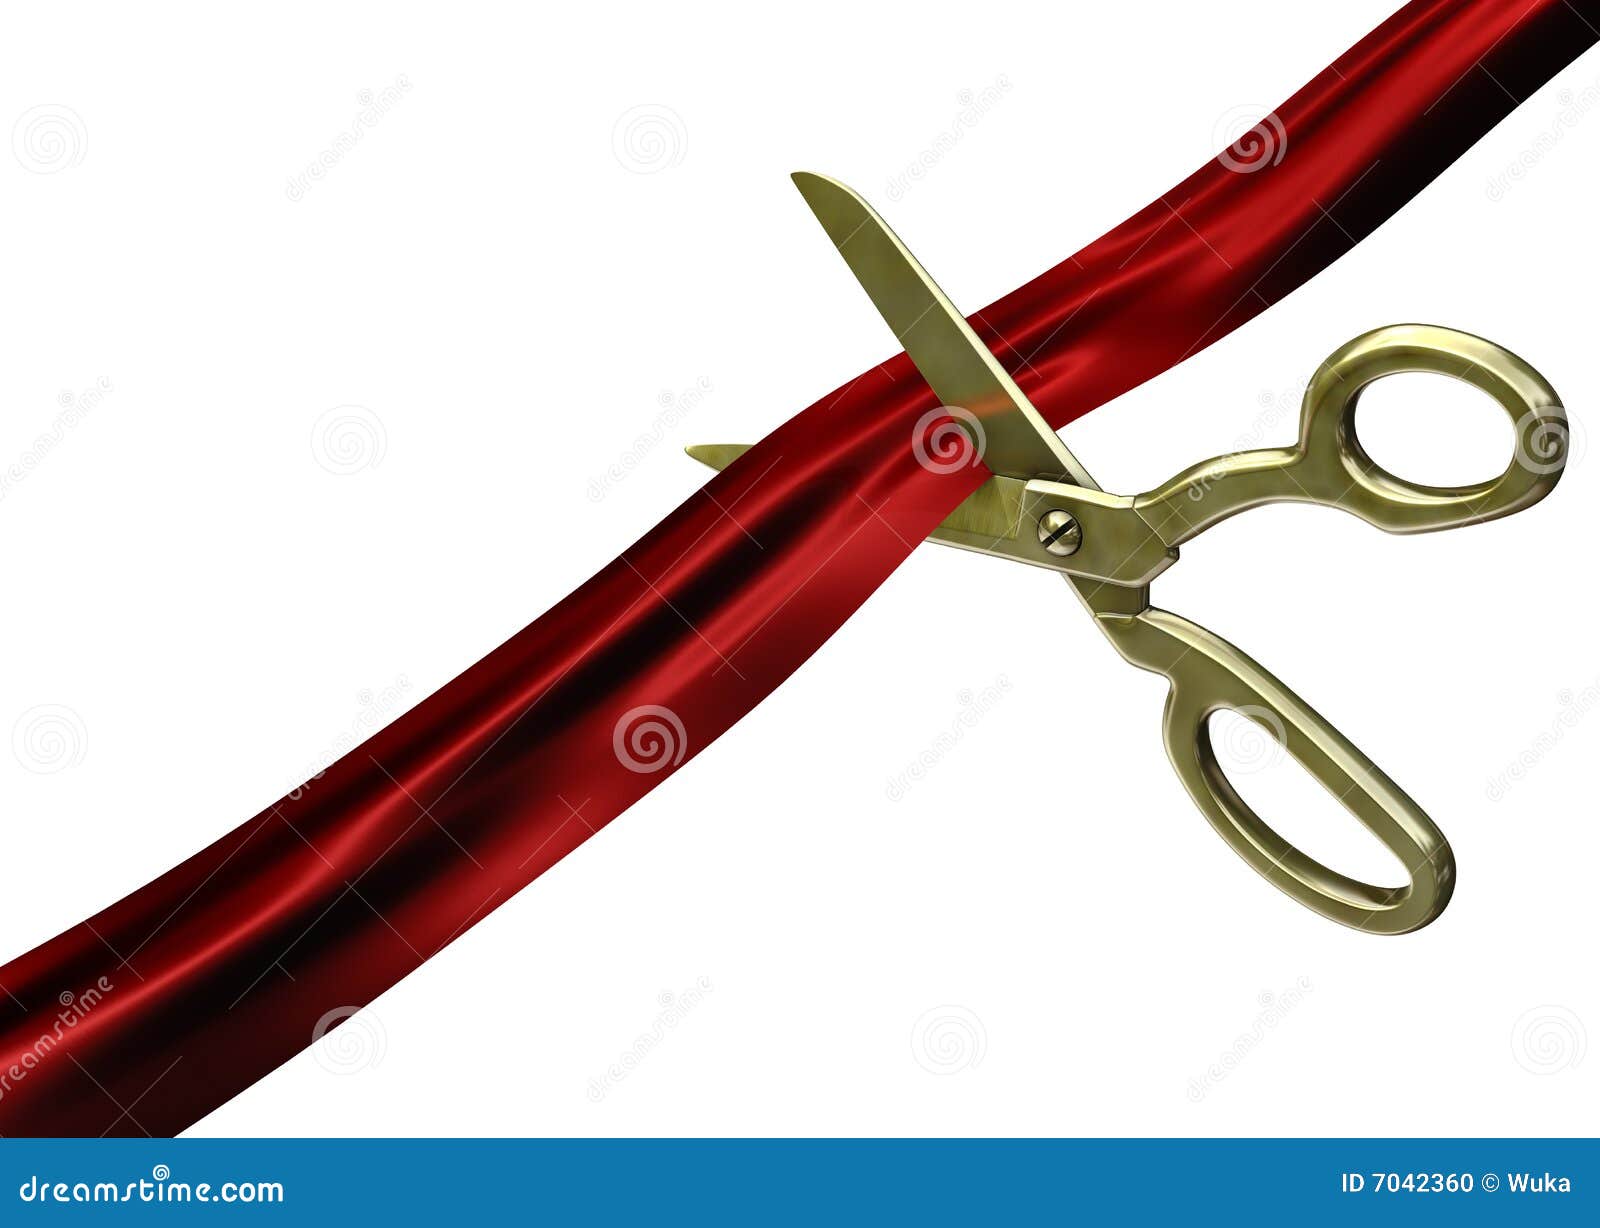 scissors cutting red ribbon